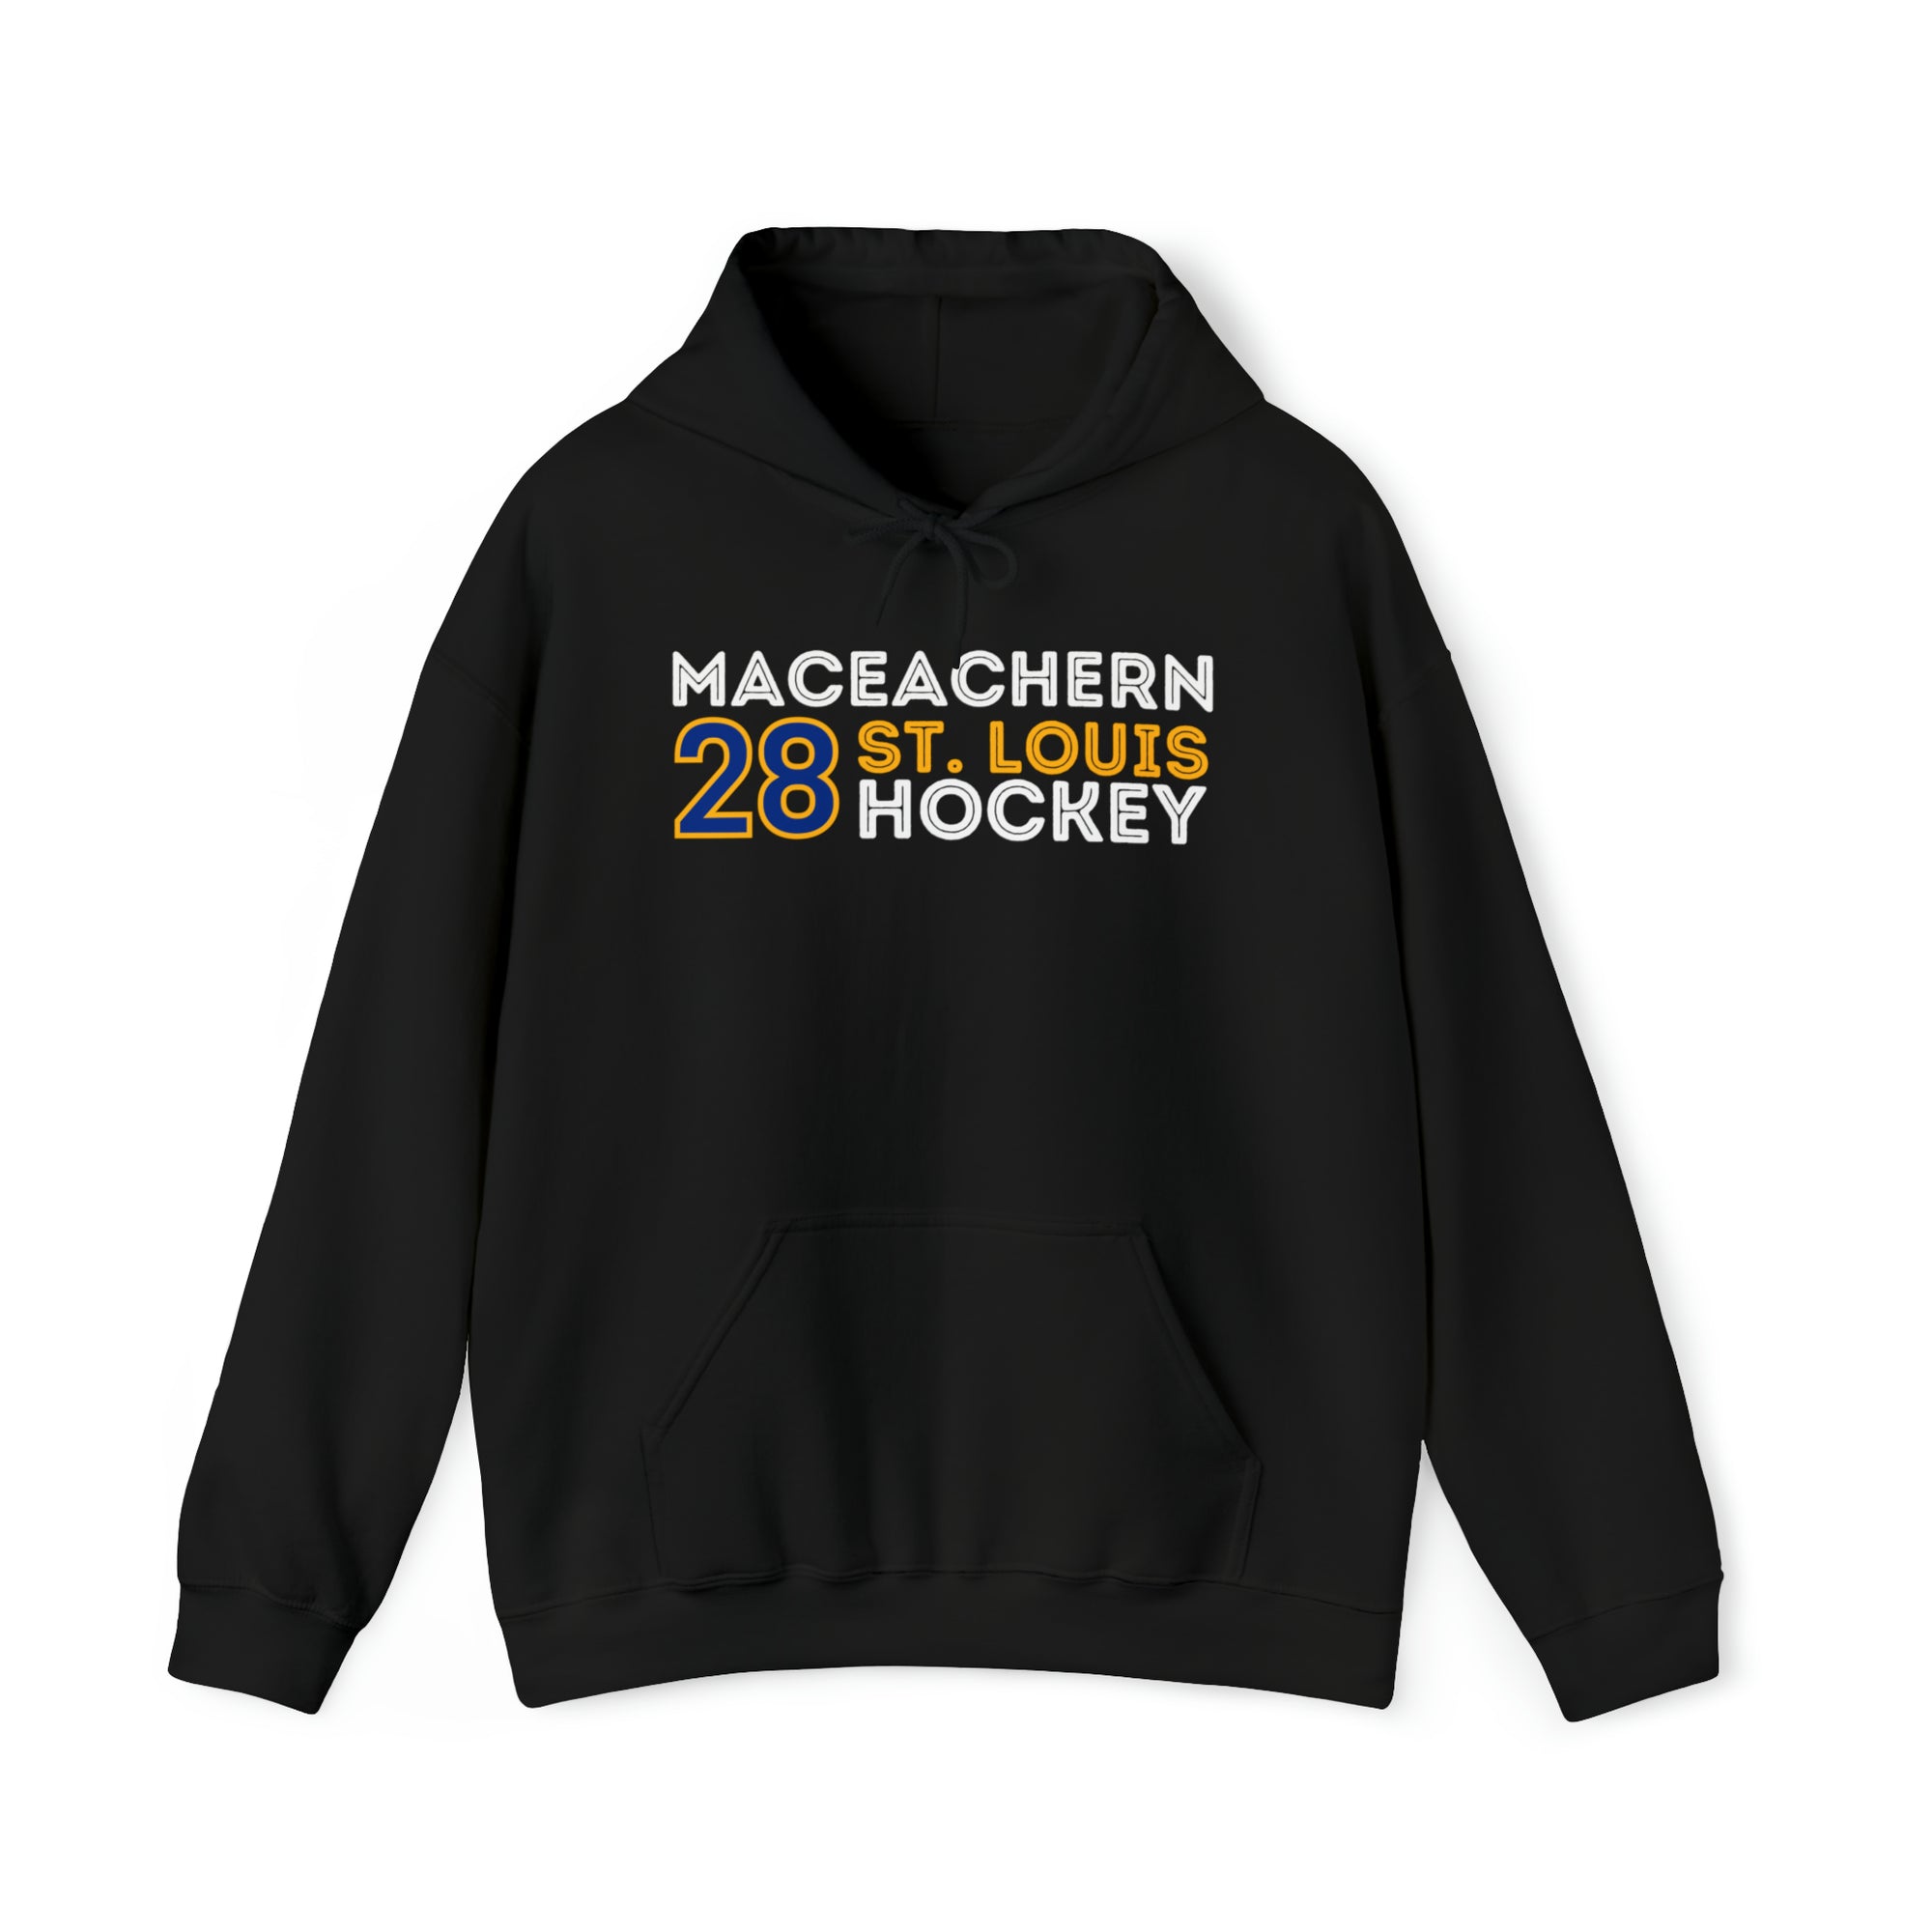 MacEachern 28 St. Louis Hockey Grafitti Wall Design Unisex Hooded Sweatshirt